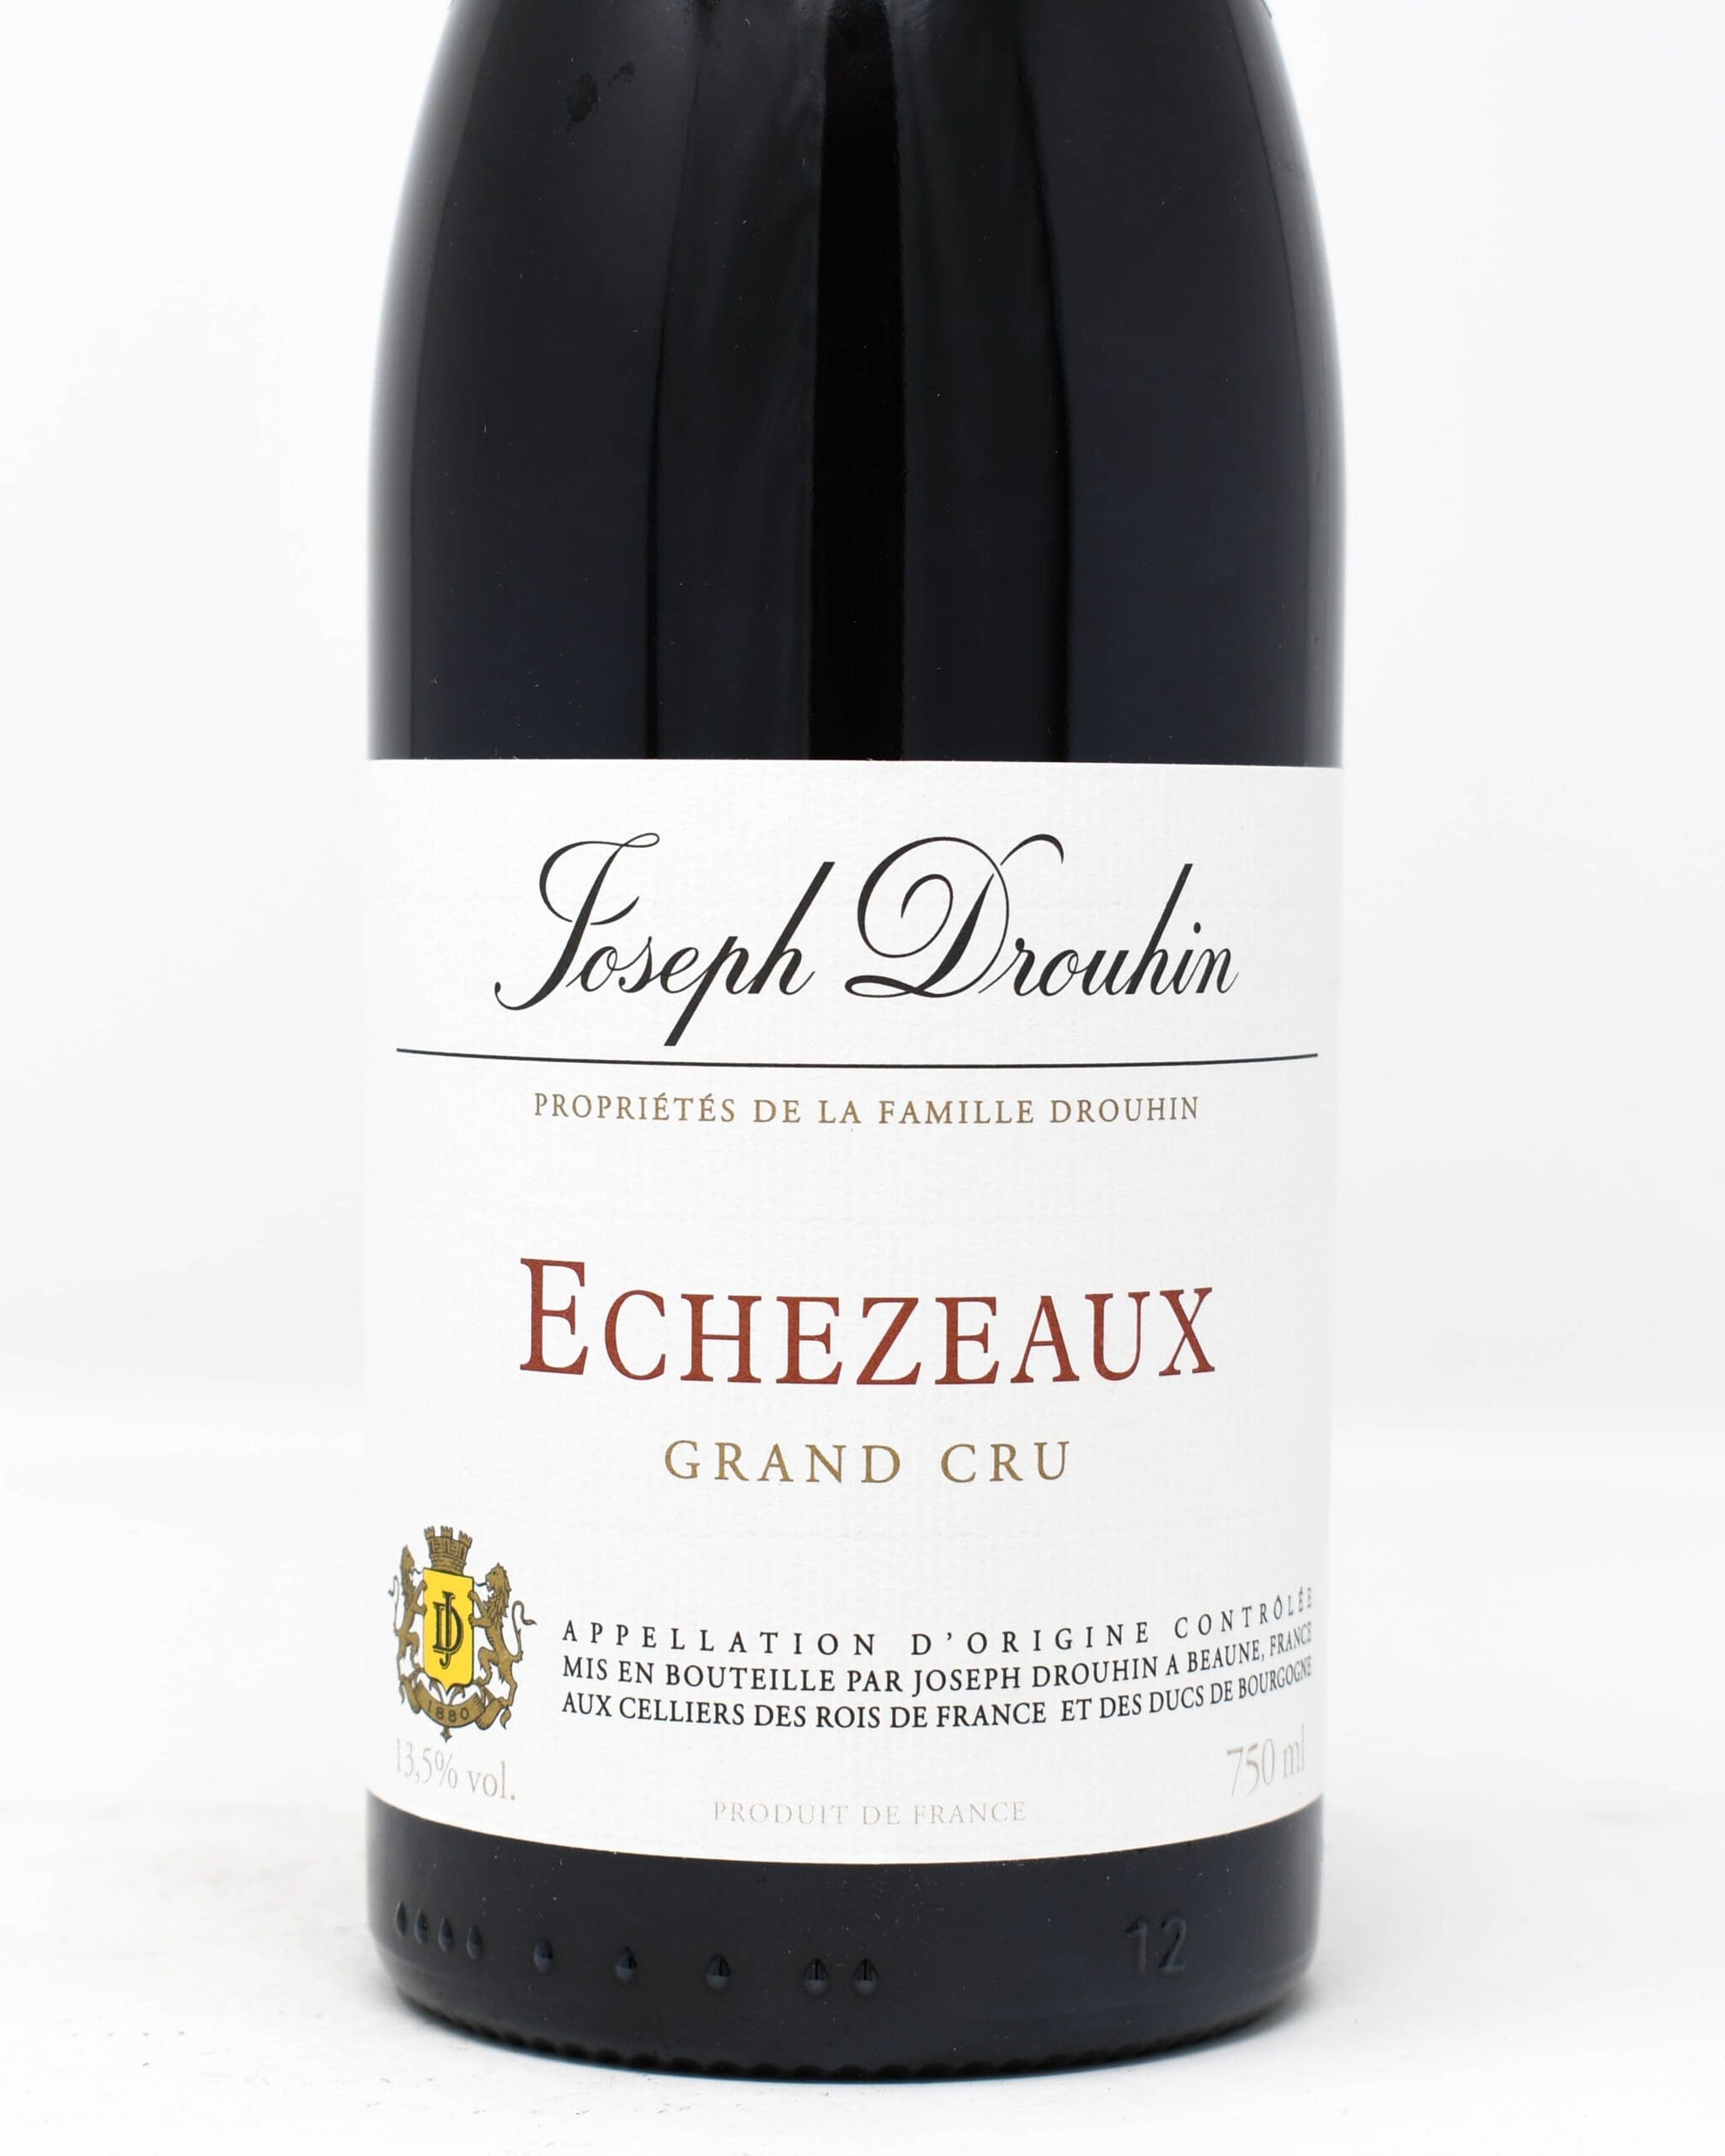 Wine by the winery Joseph Drouhin.